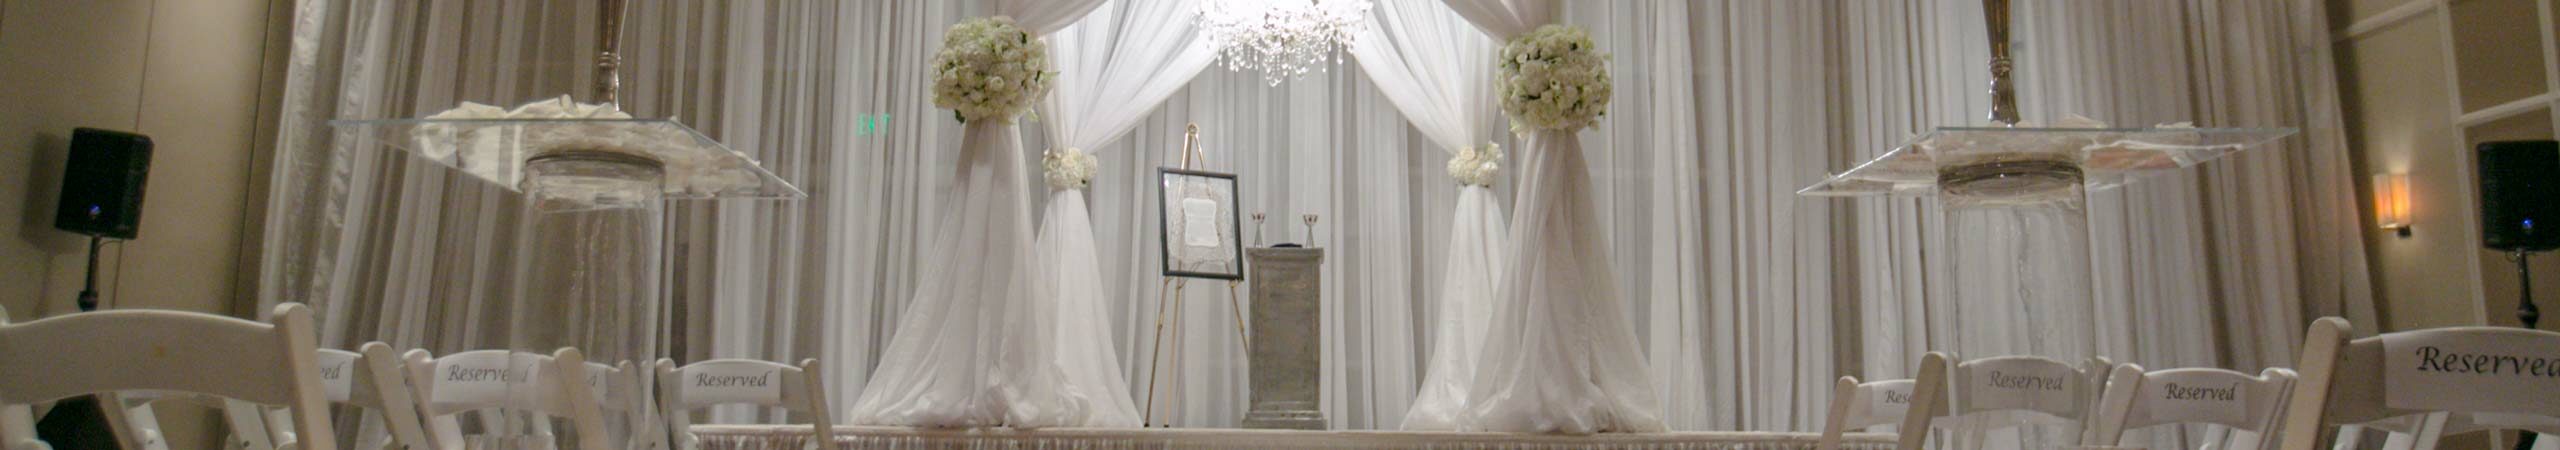 Jacksonville Wedding Decor